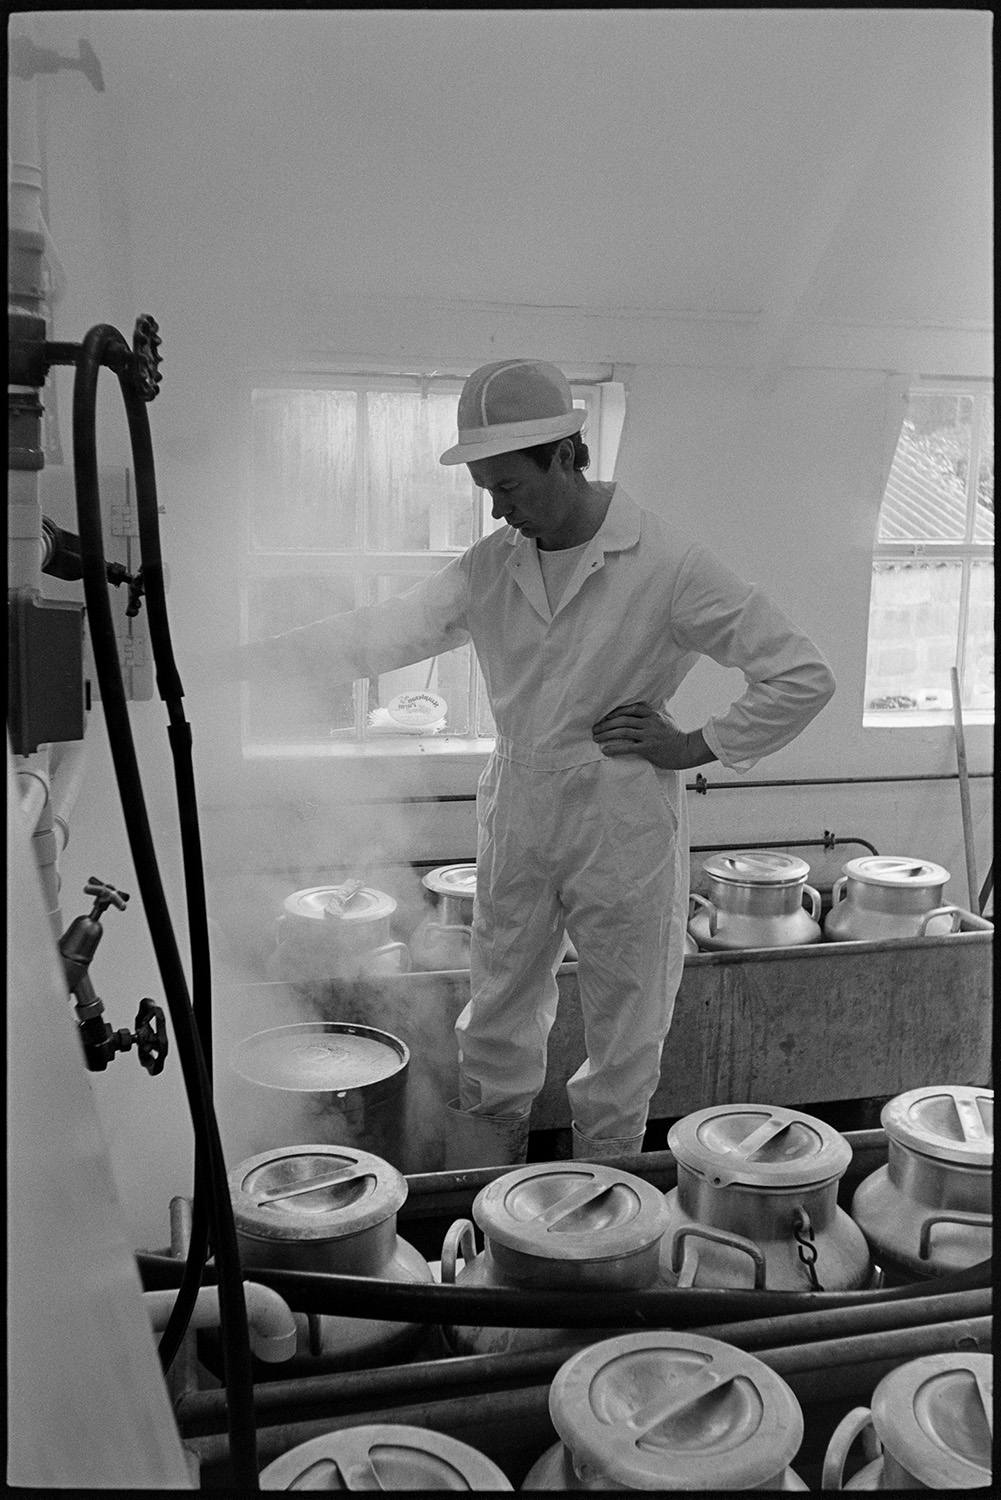 Yoghurt maker in dairy. 
[Peter Duncan making yoghurt in the dairy at Stapleton Farm, Langtree. His stood by rows of milk churns.]